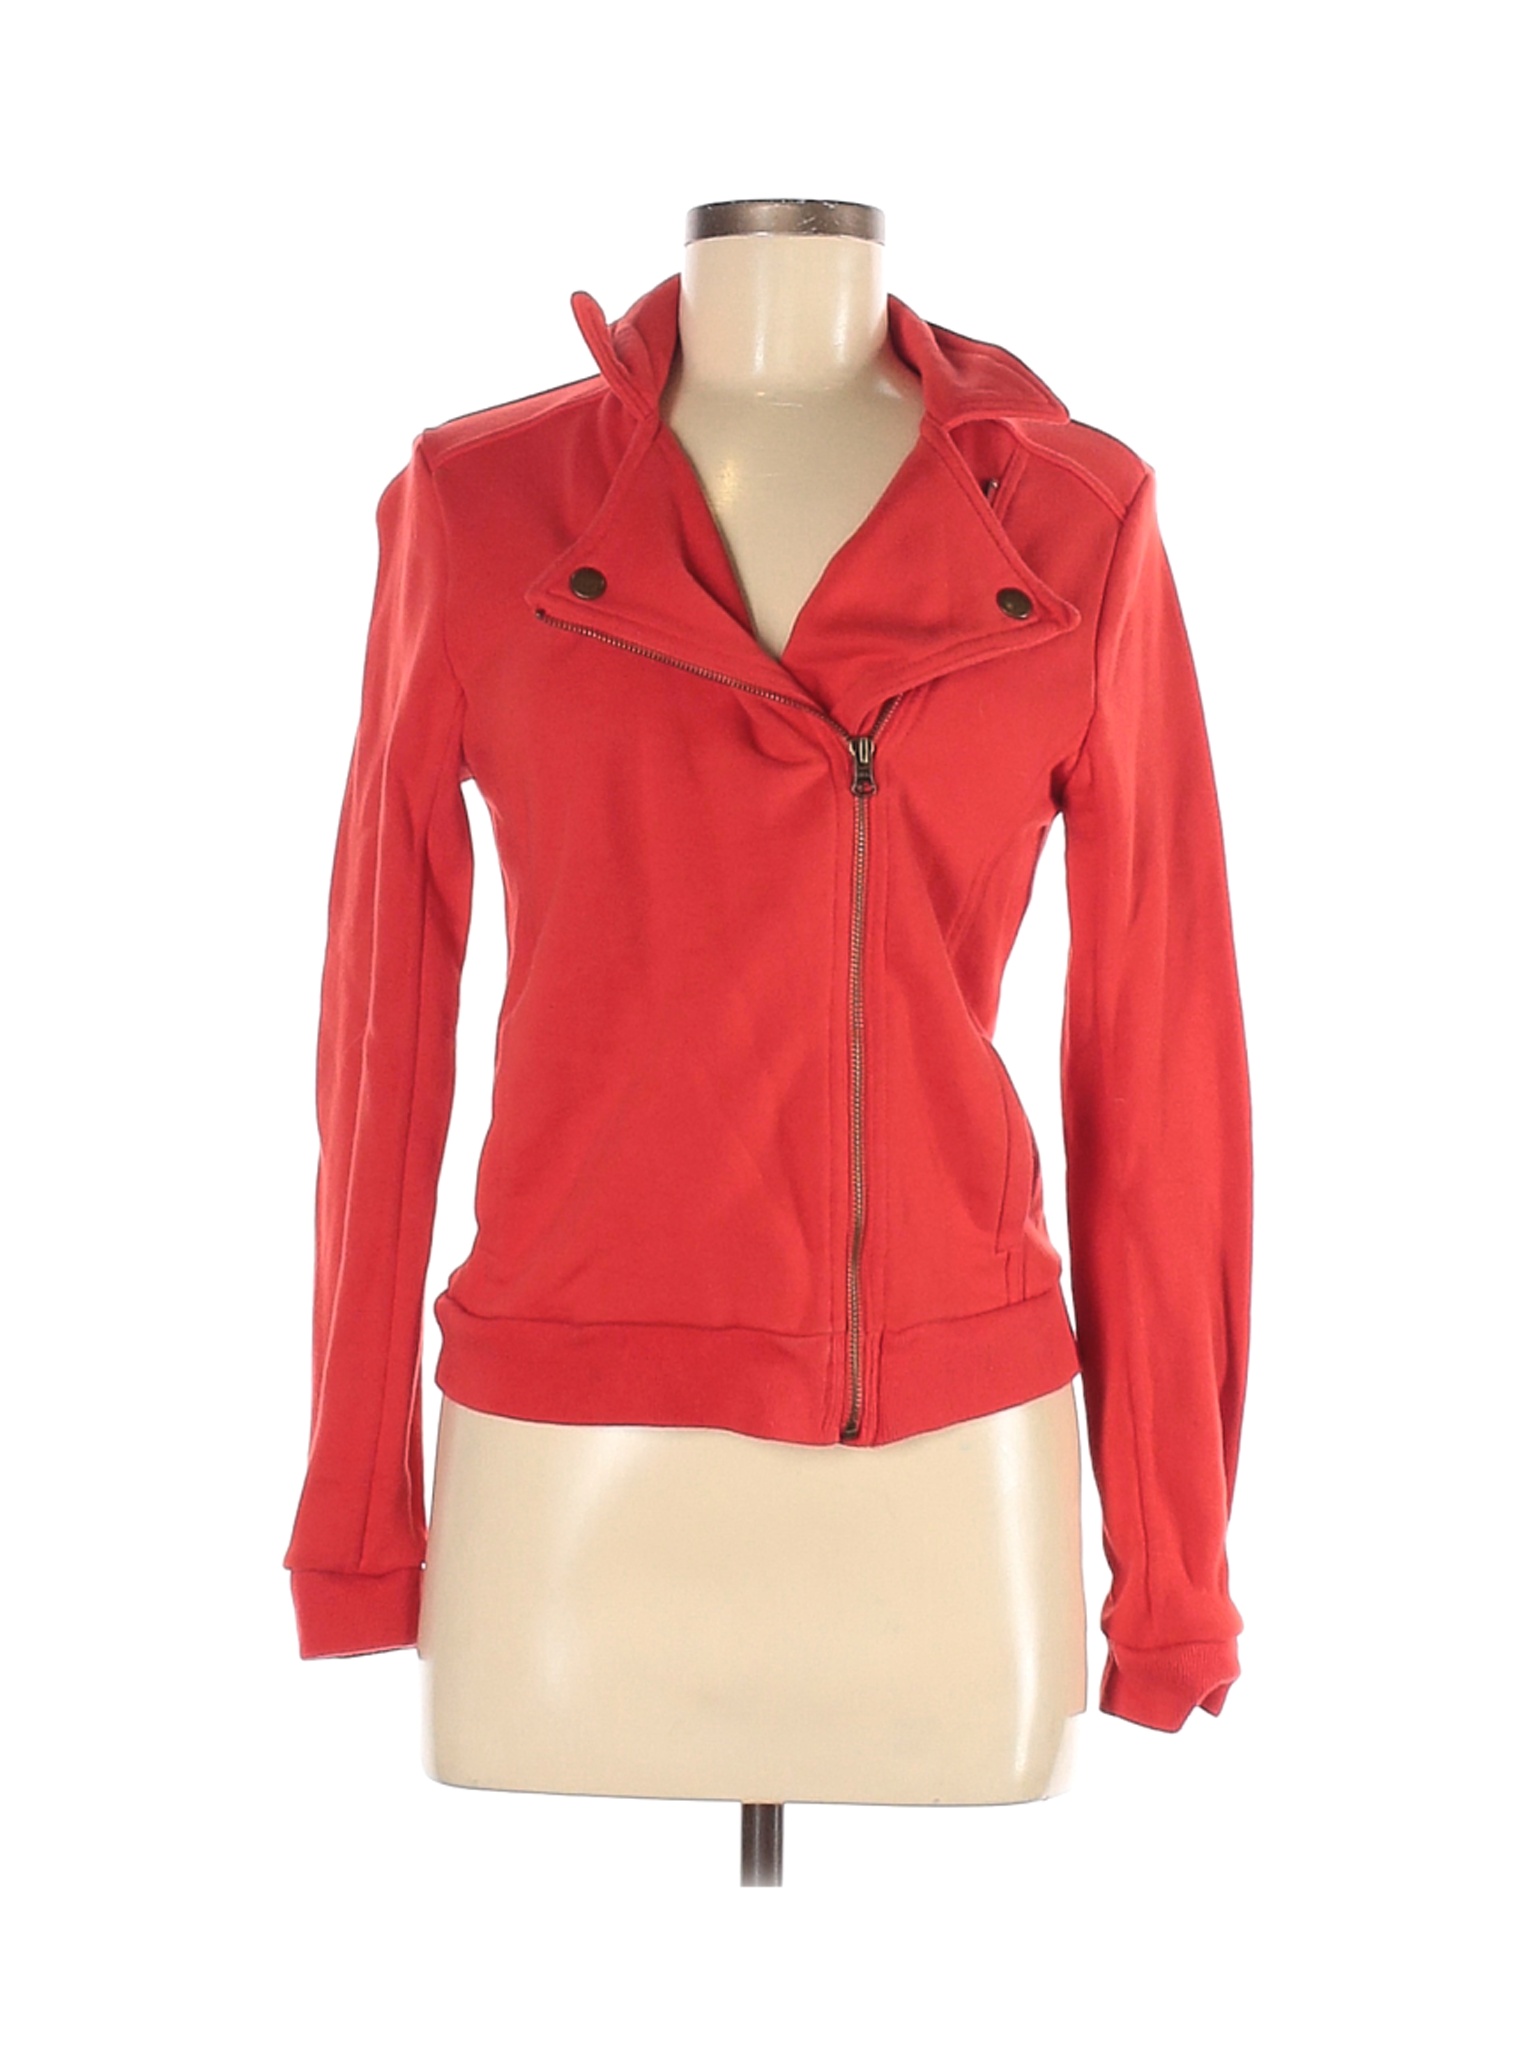 Gap Women Red Jacket M | eBay